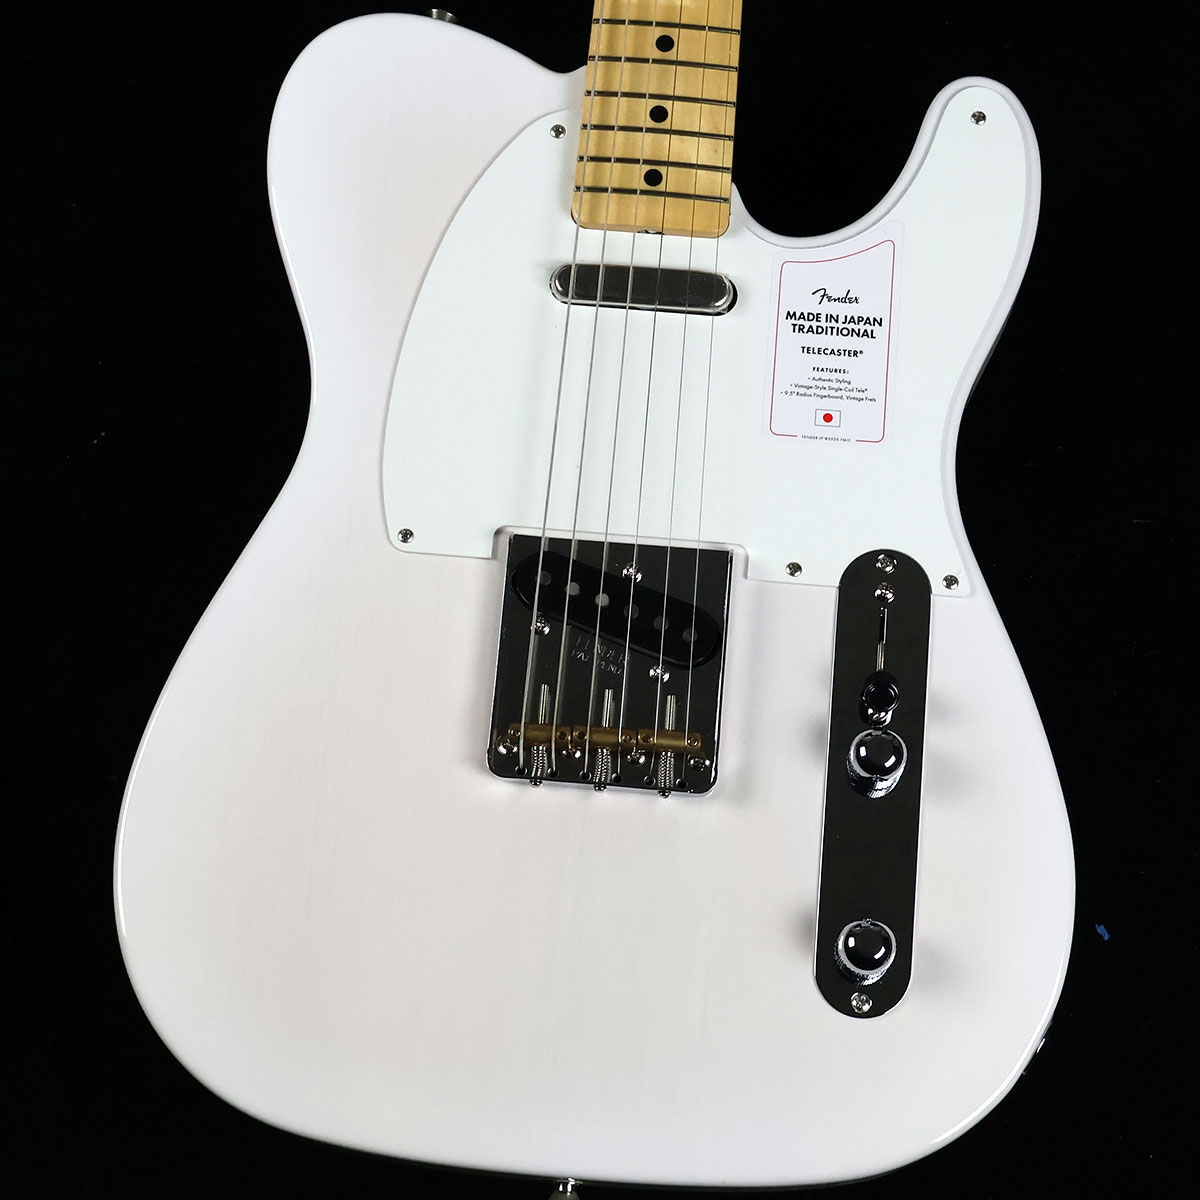 Fender Made In Japan Traditional 50s Telecaster White Blonde エレキギター フェンダー ジャパントラディショナル テレキャスター【未展示品・専任担当者による調整済み】【ミ・ナーラ奈良店】